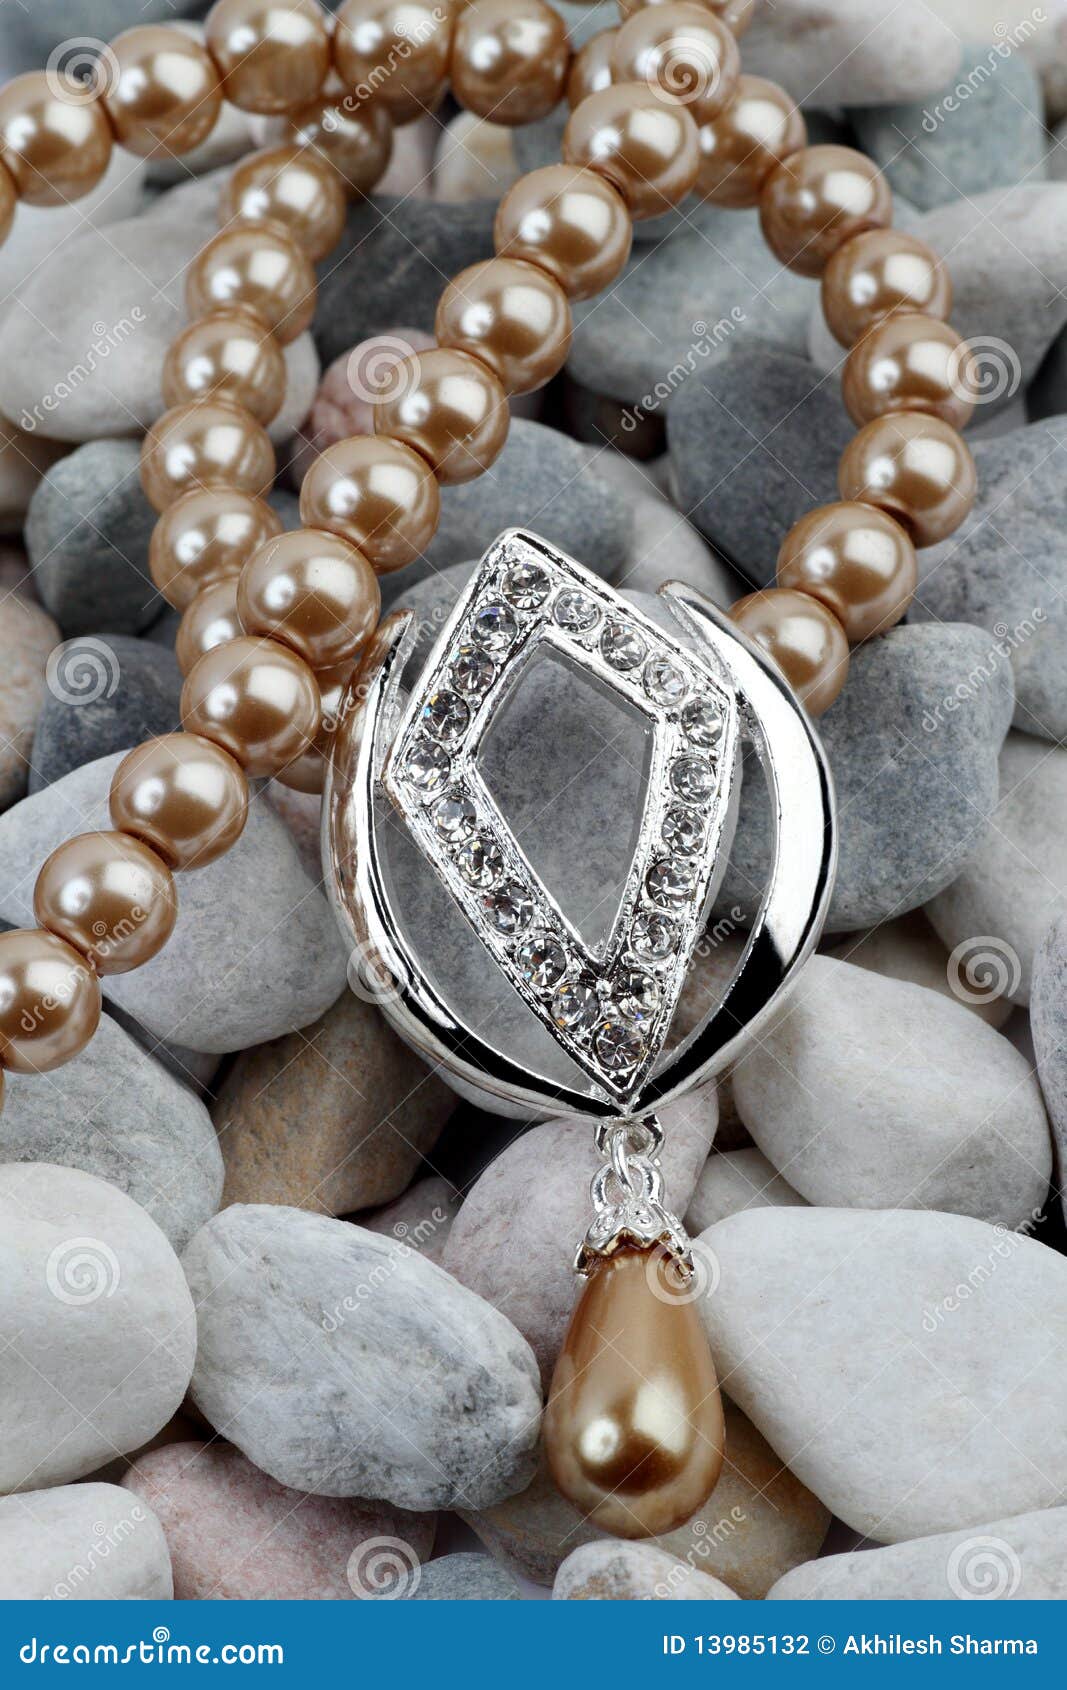 pearl, diamond jewelery on stones